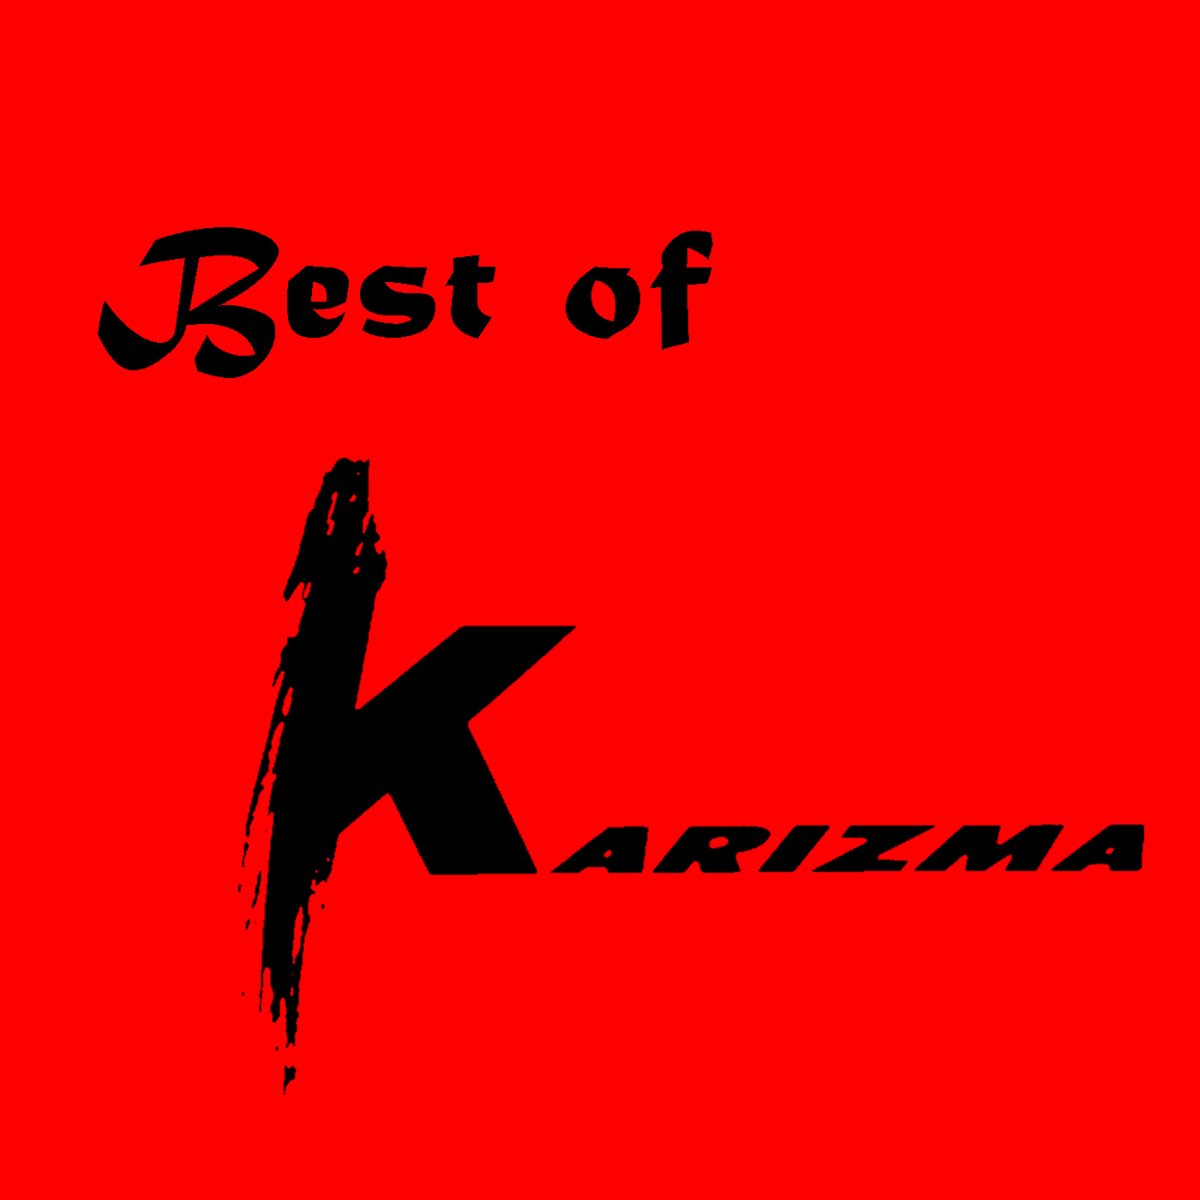 The Best of Karizma - Album by Karizma - Apple Music